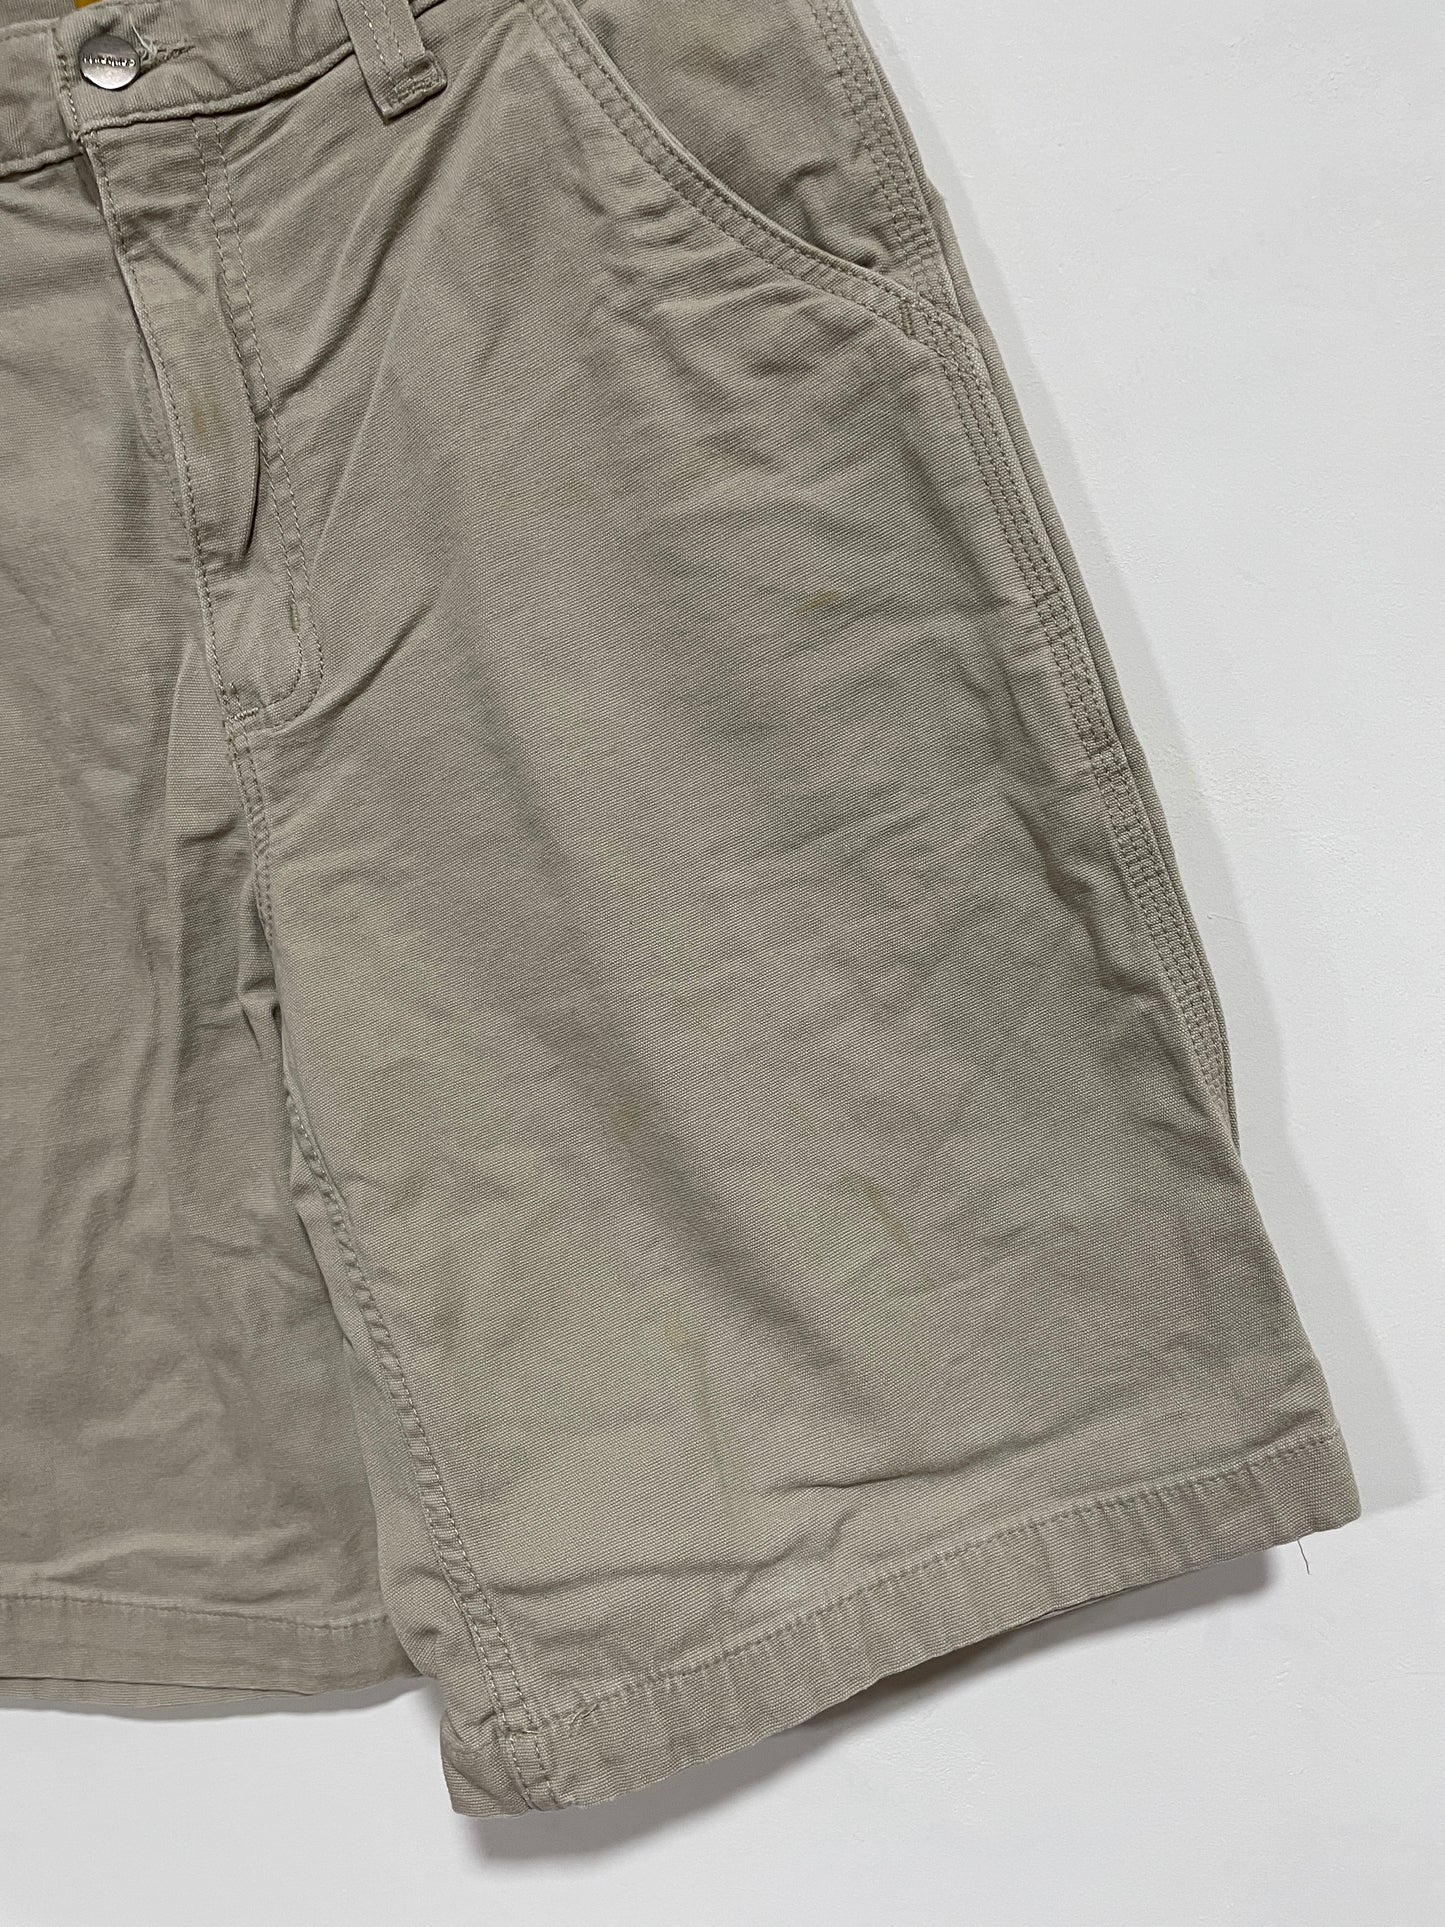 Shorts Carhartt workwear (MR321)